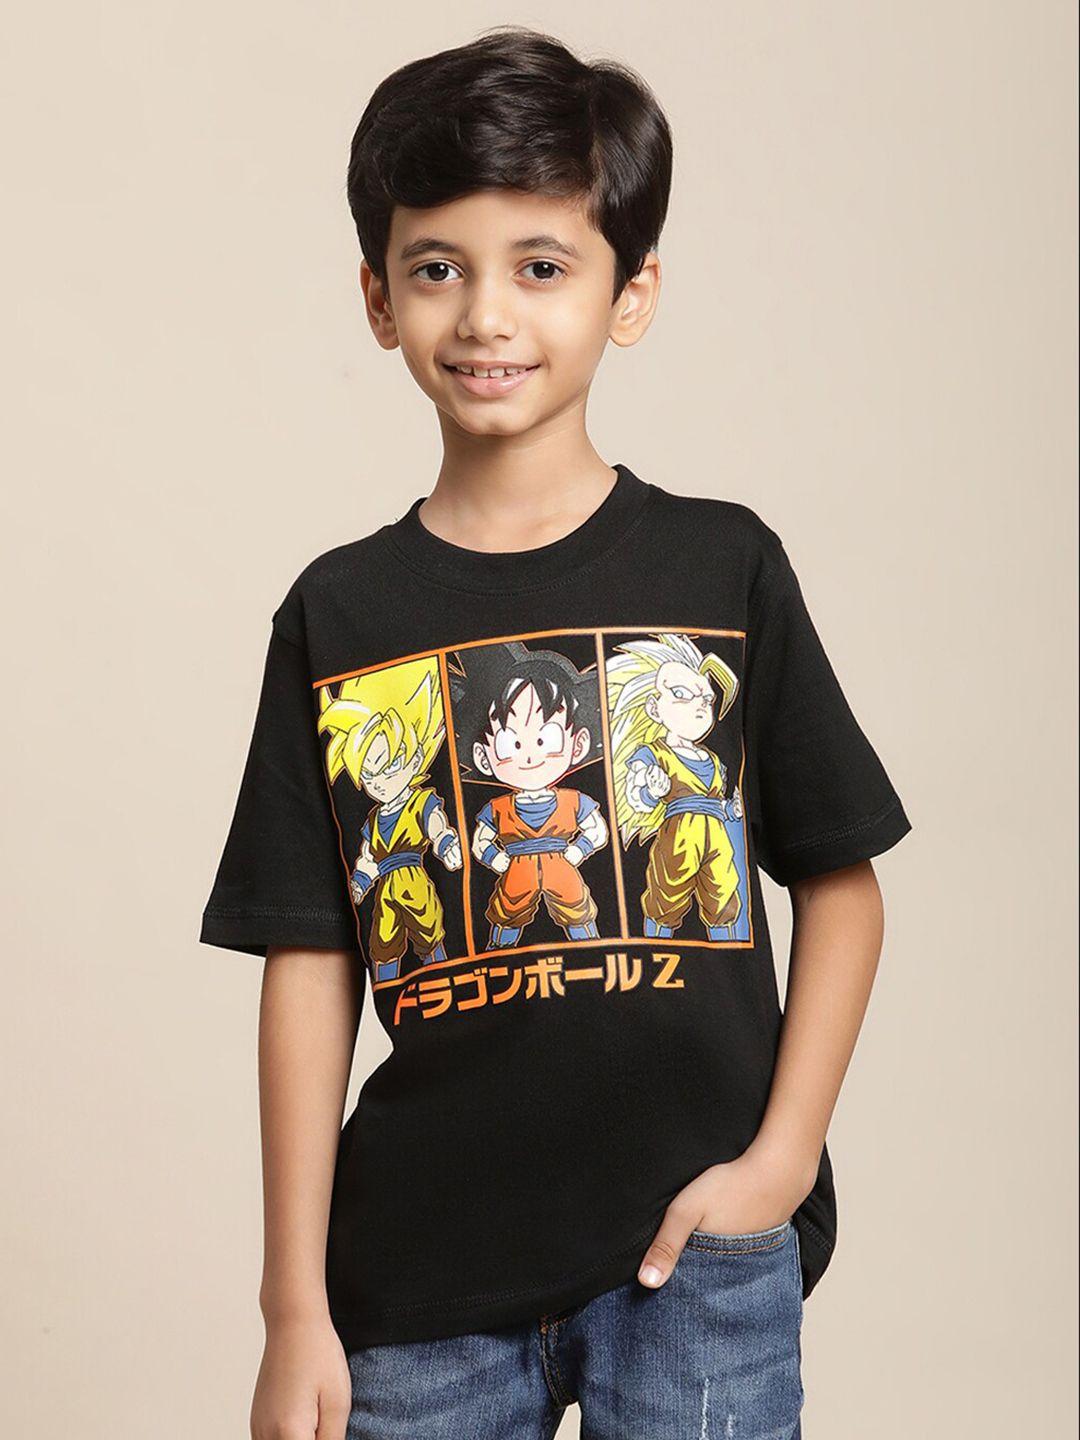 Kids Ville Boys Dragon Ball Z Printed Cotton Tshirt